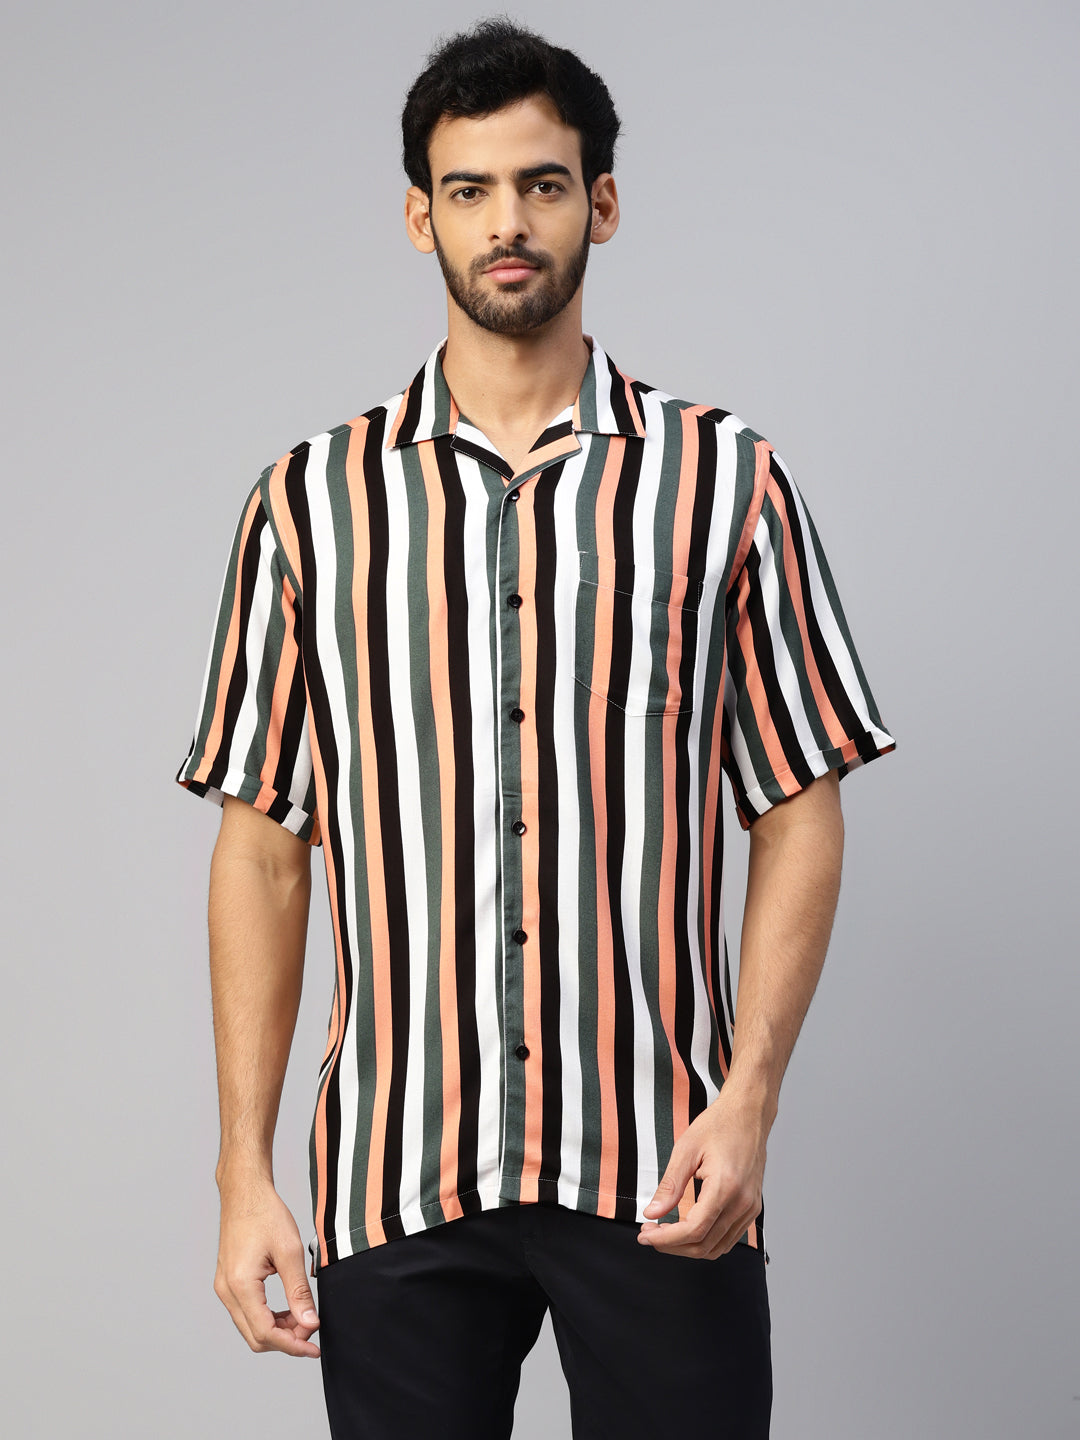 Men's Multi Colour Stripes Resort Shirt by Don Vino